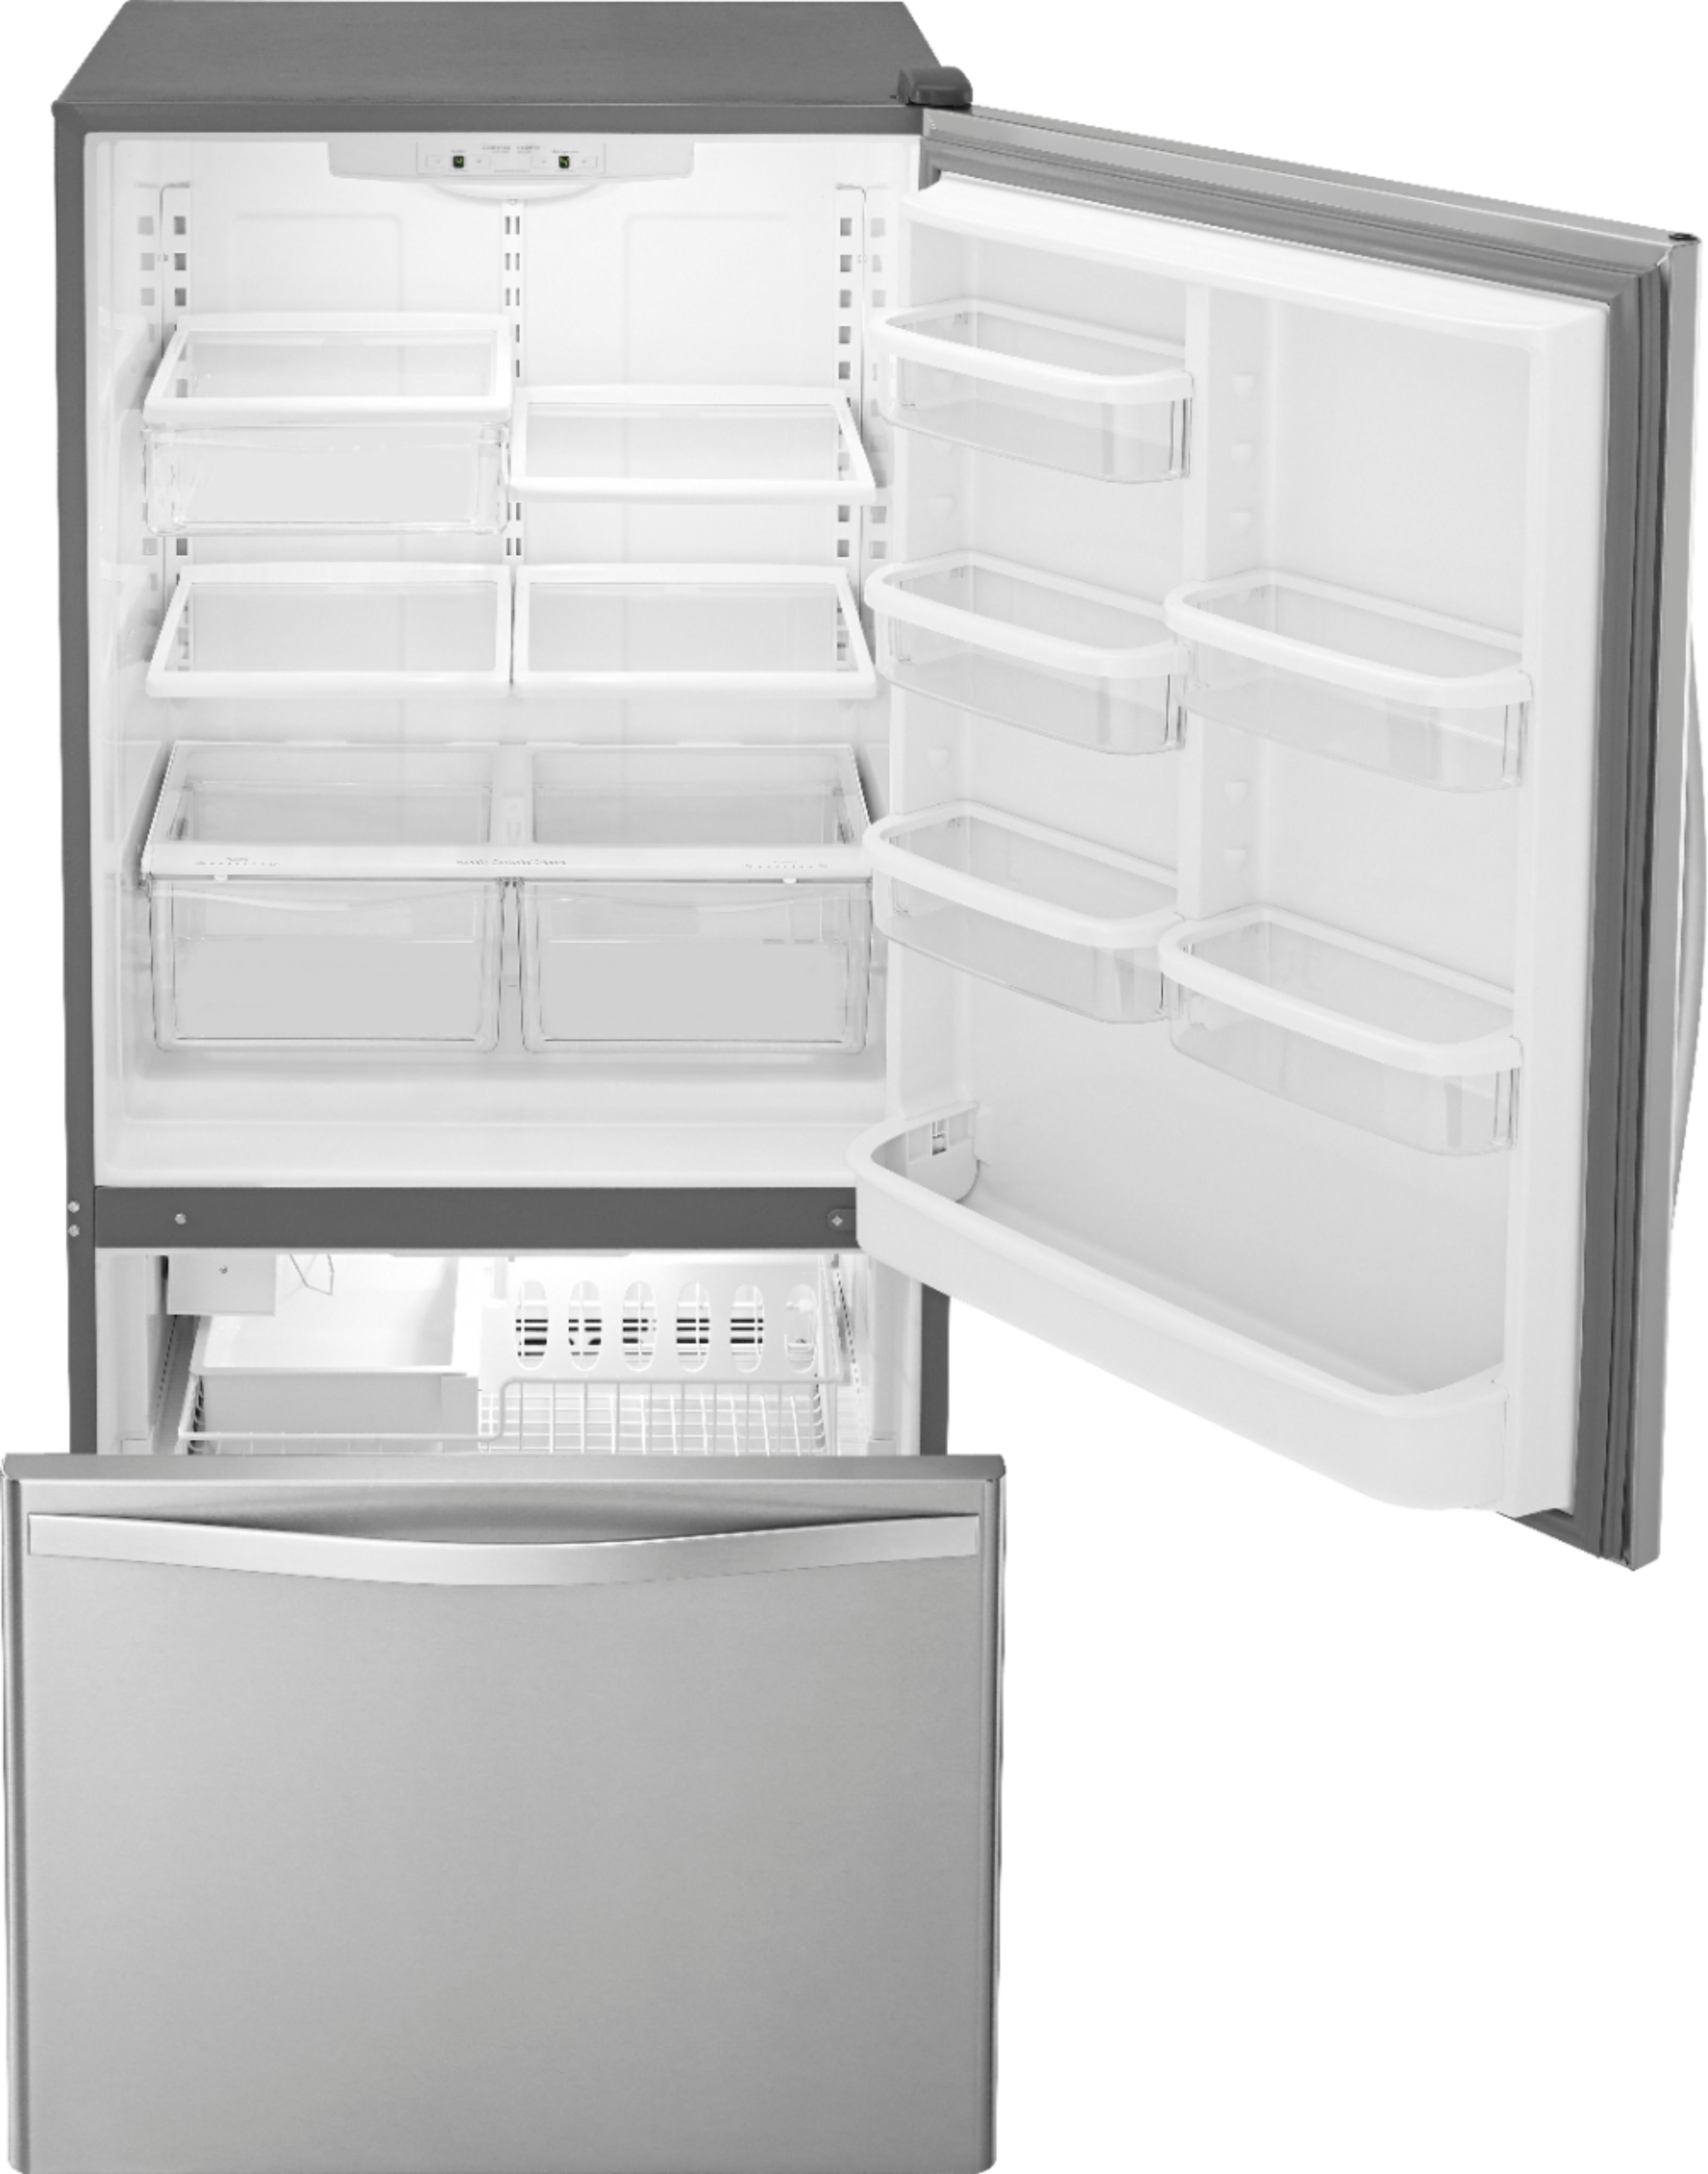 FÄRSKHET Bottom-freezer refrigerator, stainless steel color, 10.4 cu.ft -  IKEA